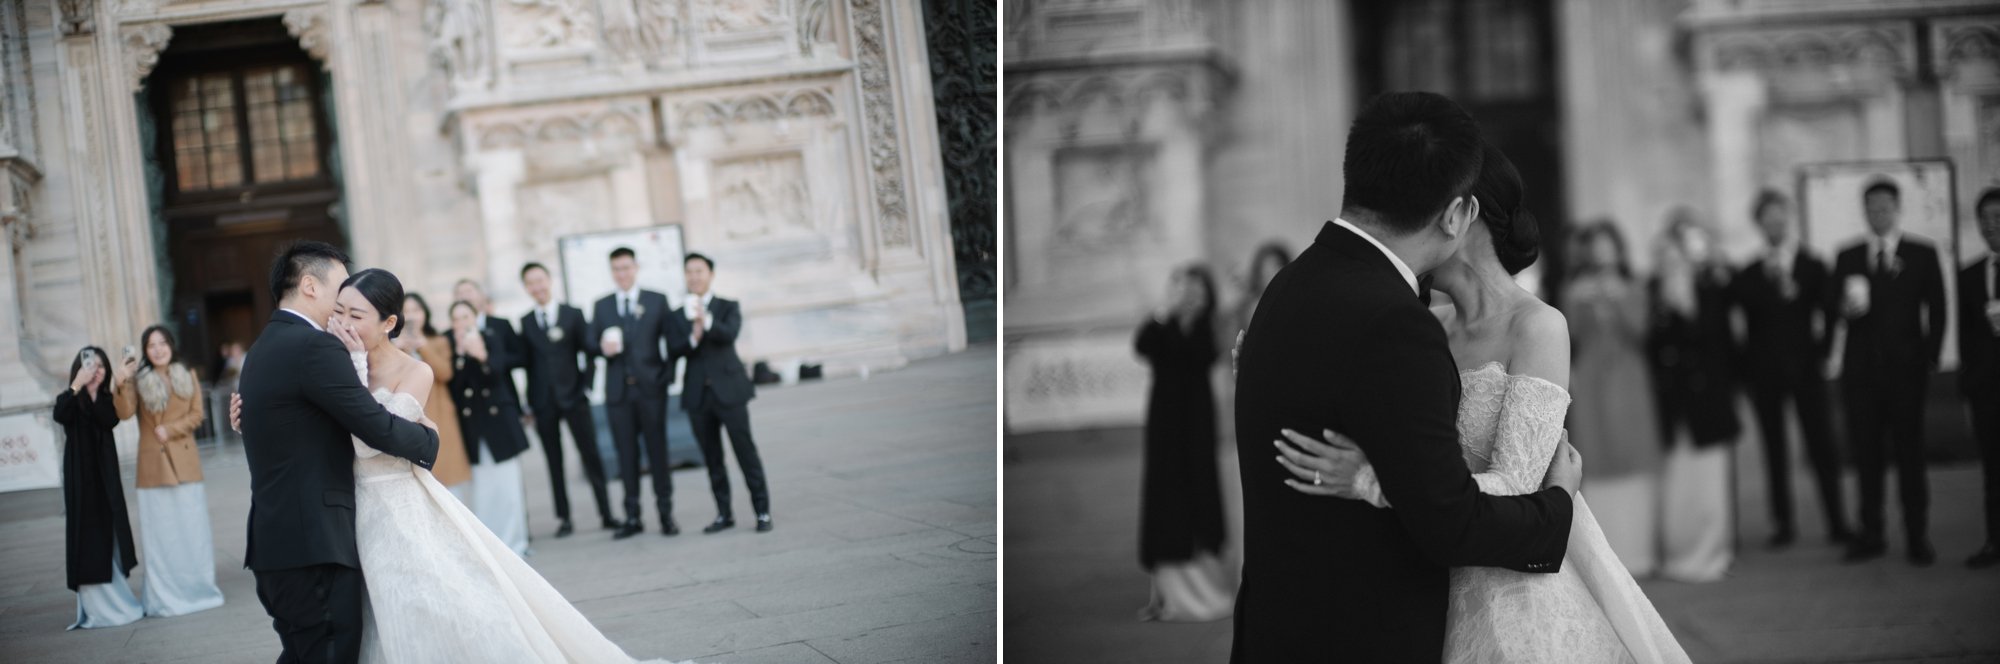 Prawira-Evelyn-Dolomites-Italy-Santre wedding-Yefta Gunawan-Jeriko MUA-Carol Kuntjoro Photography-21.jpg